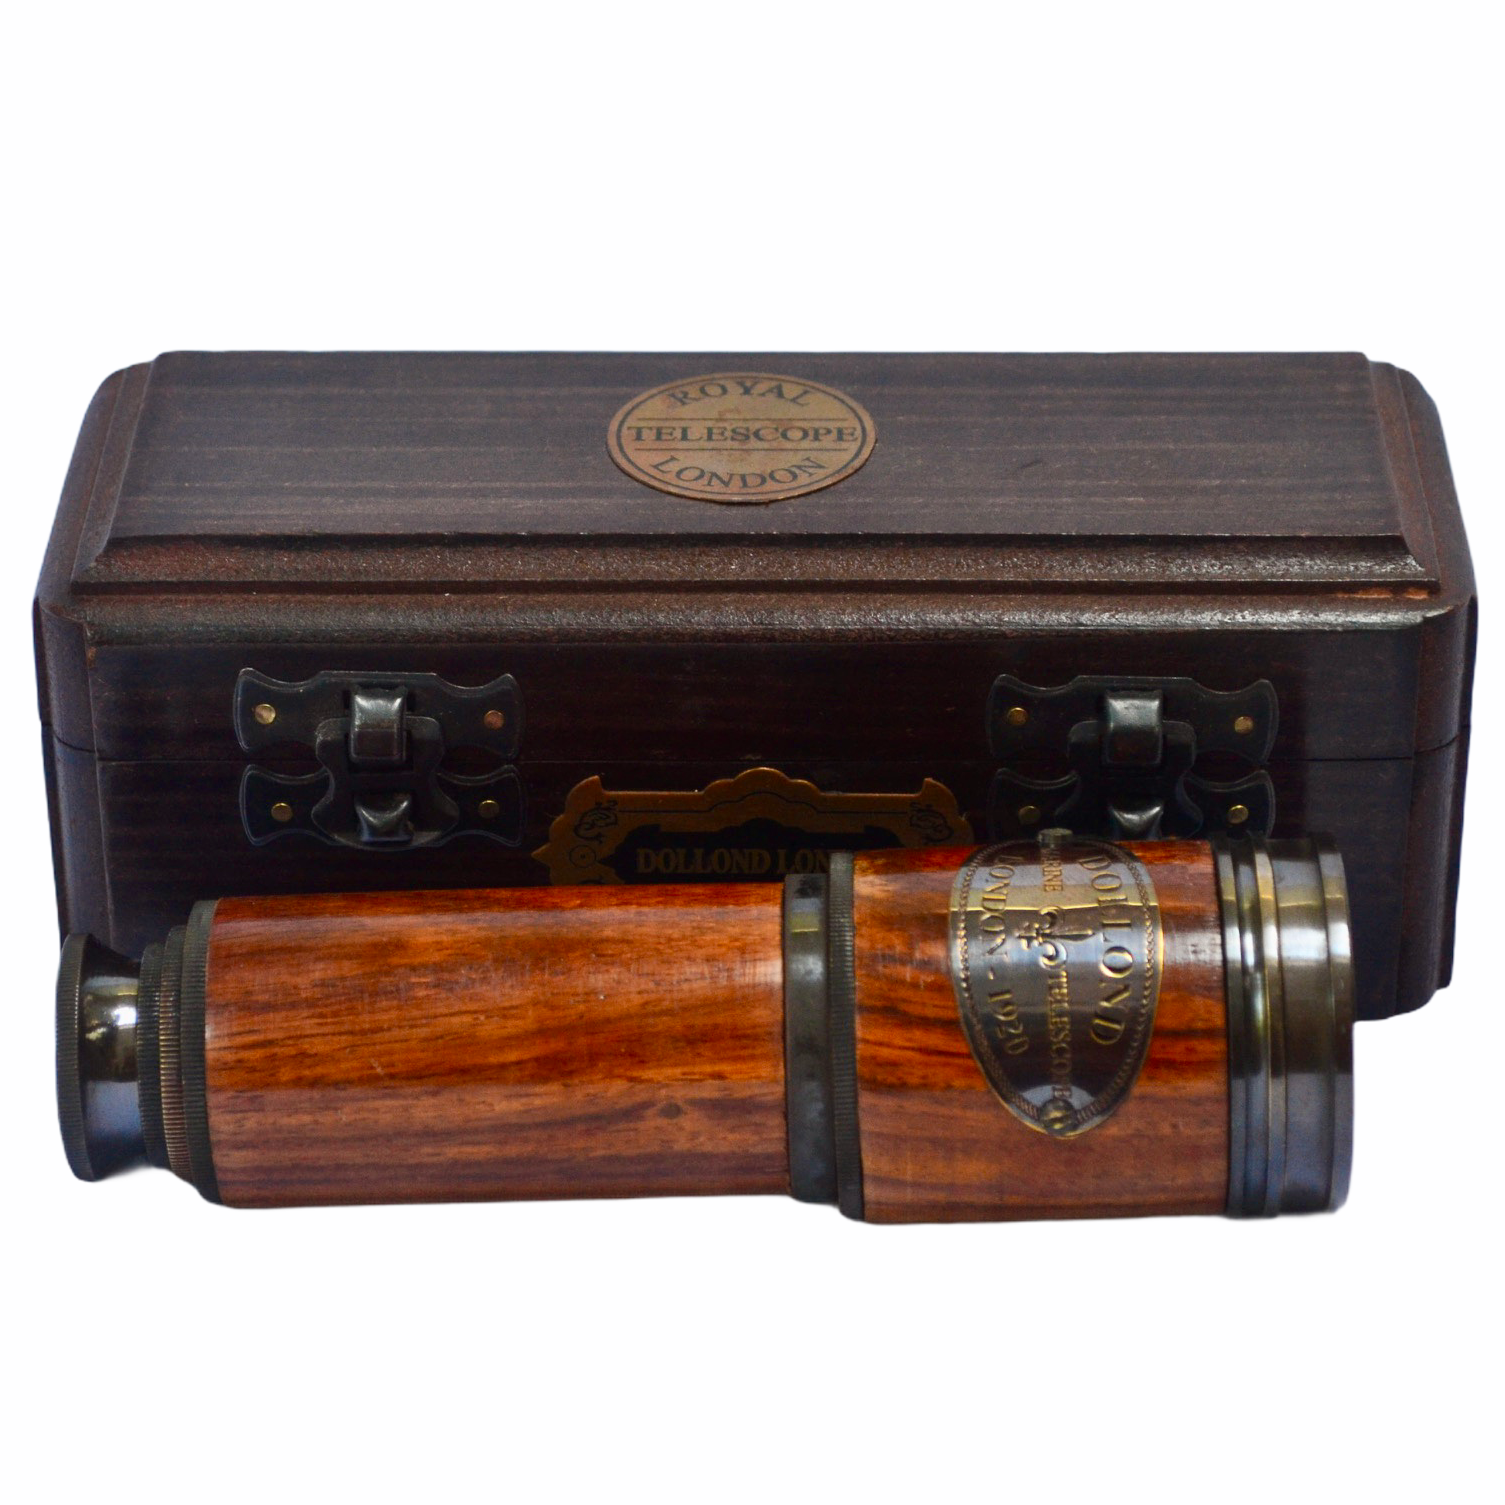 16" Black & Wood Dolland 4 Draw Telescope in a wood box